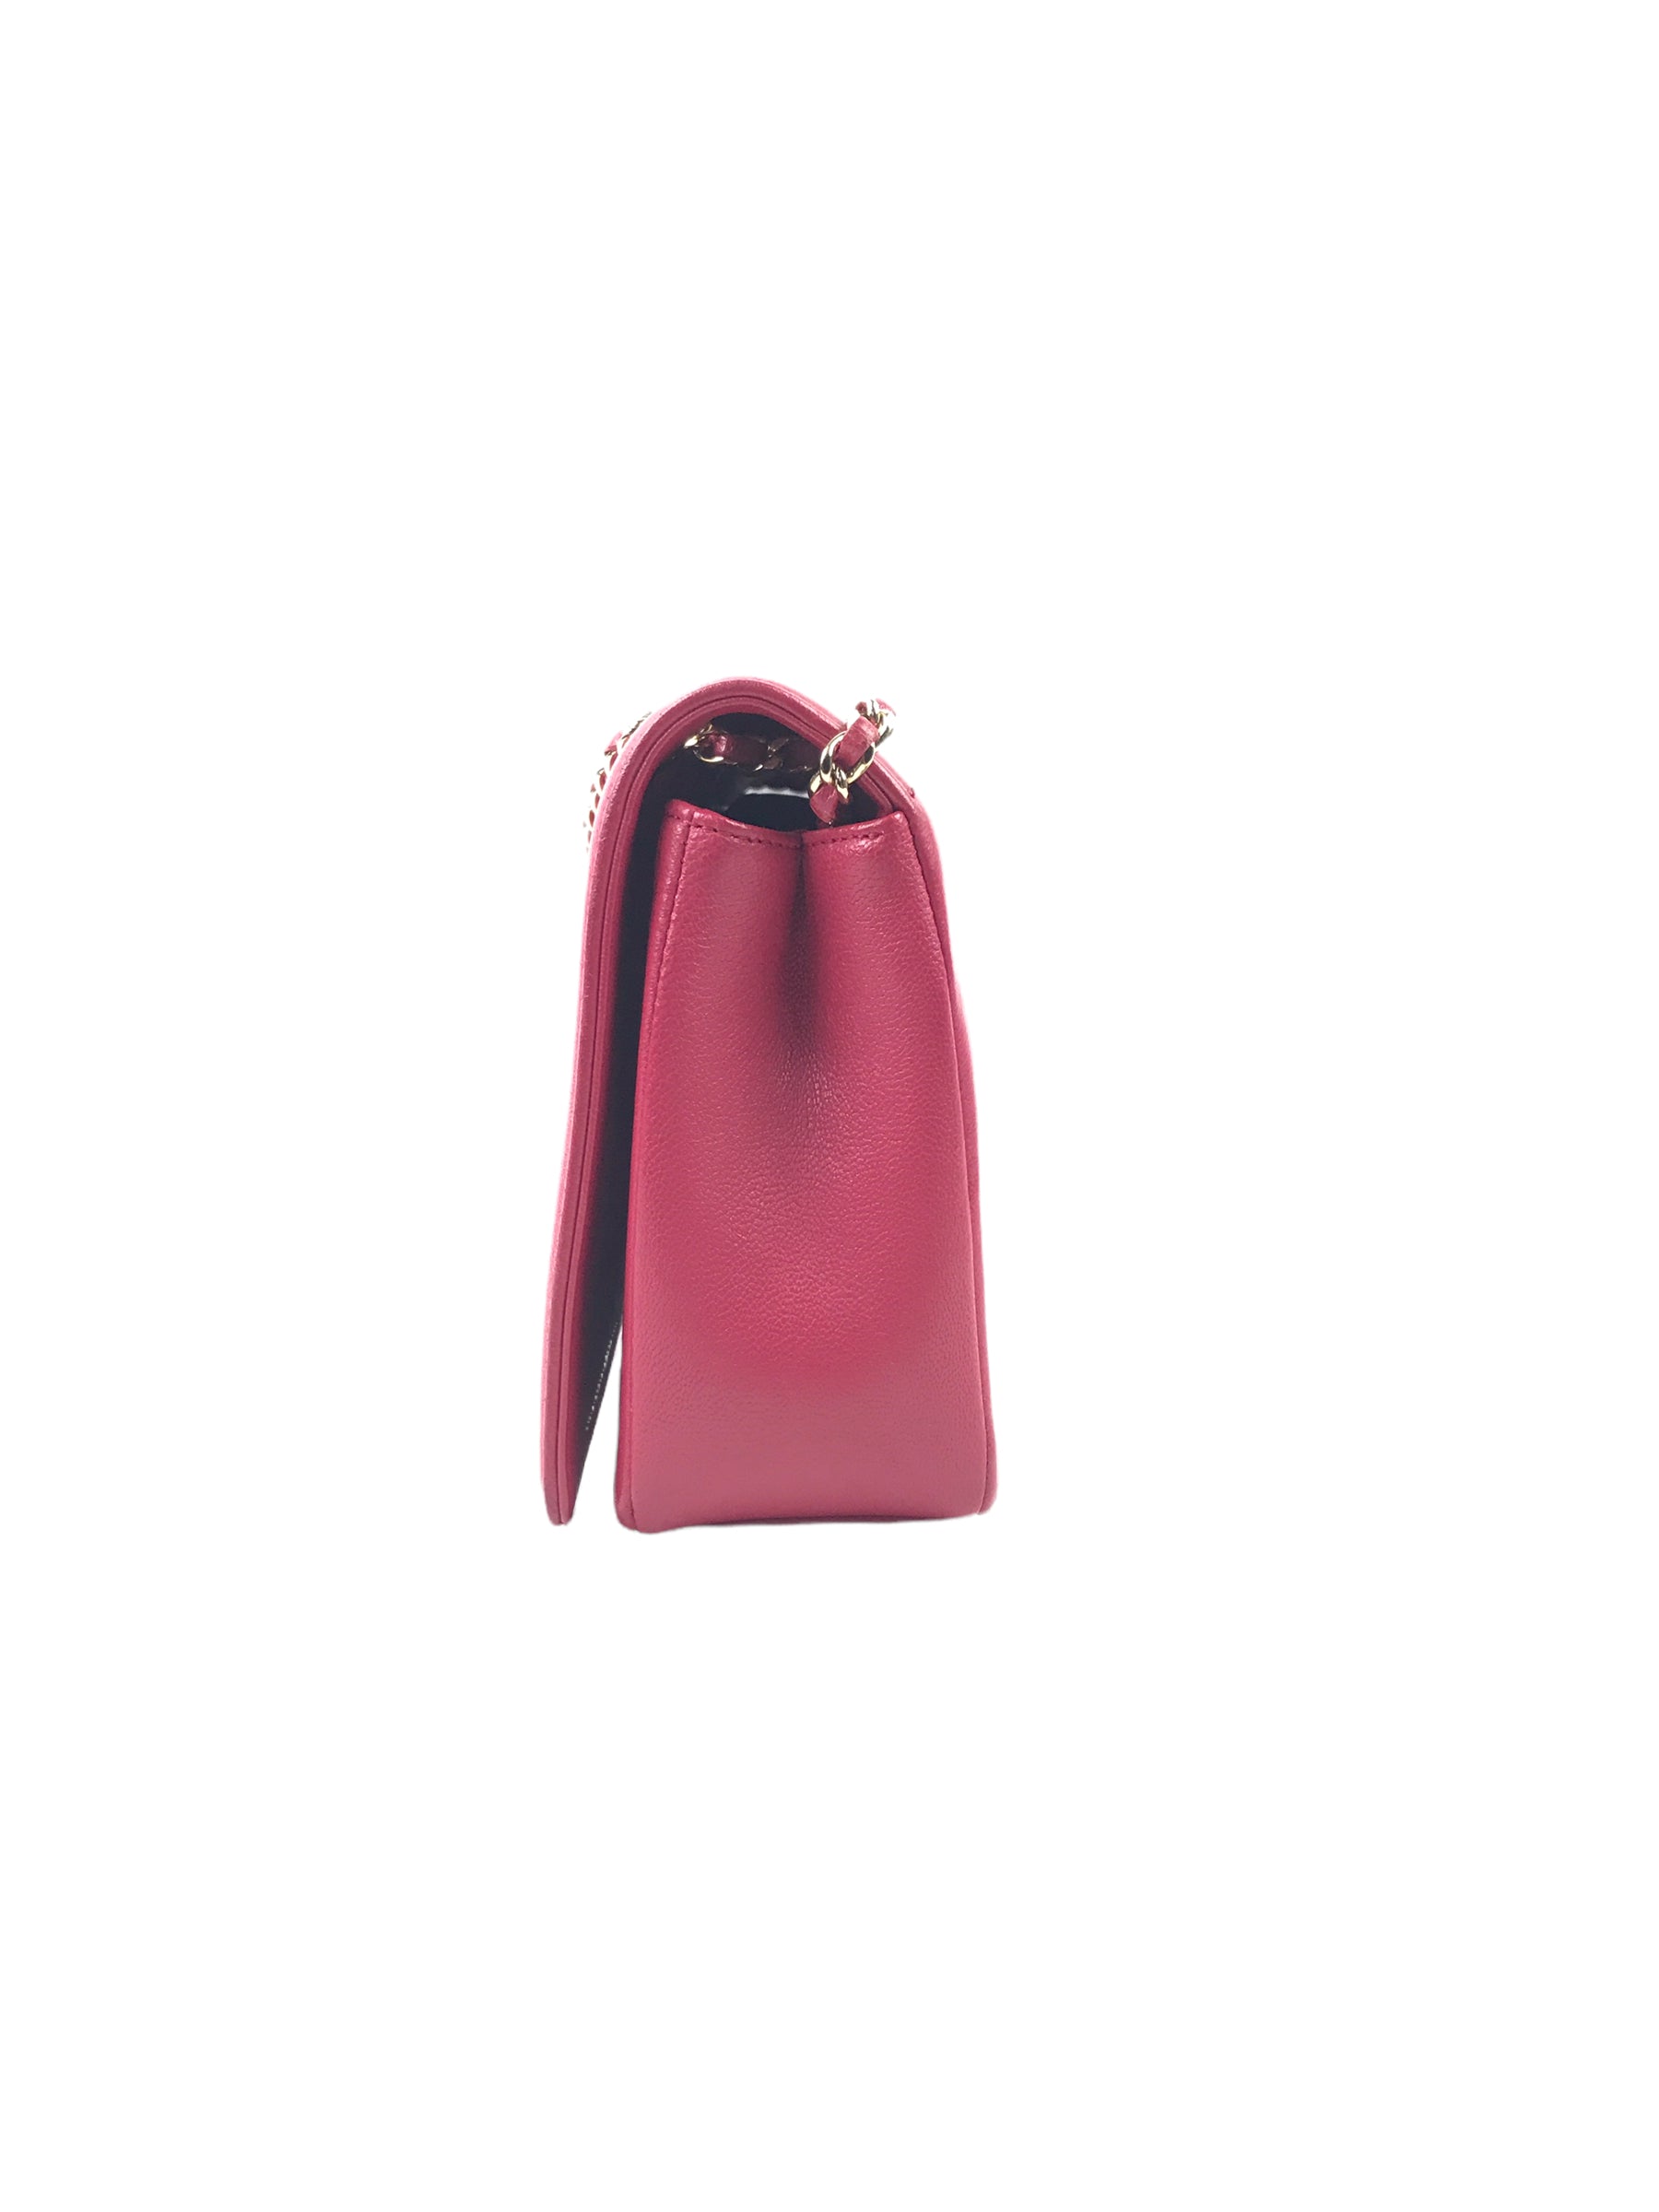 Fuchsia Pink Mademoiselle Vintage Sheepskin Flap Bag W/GHW